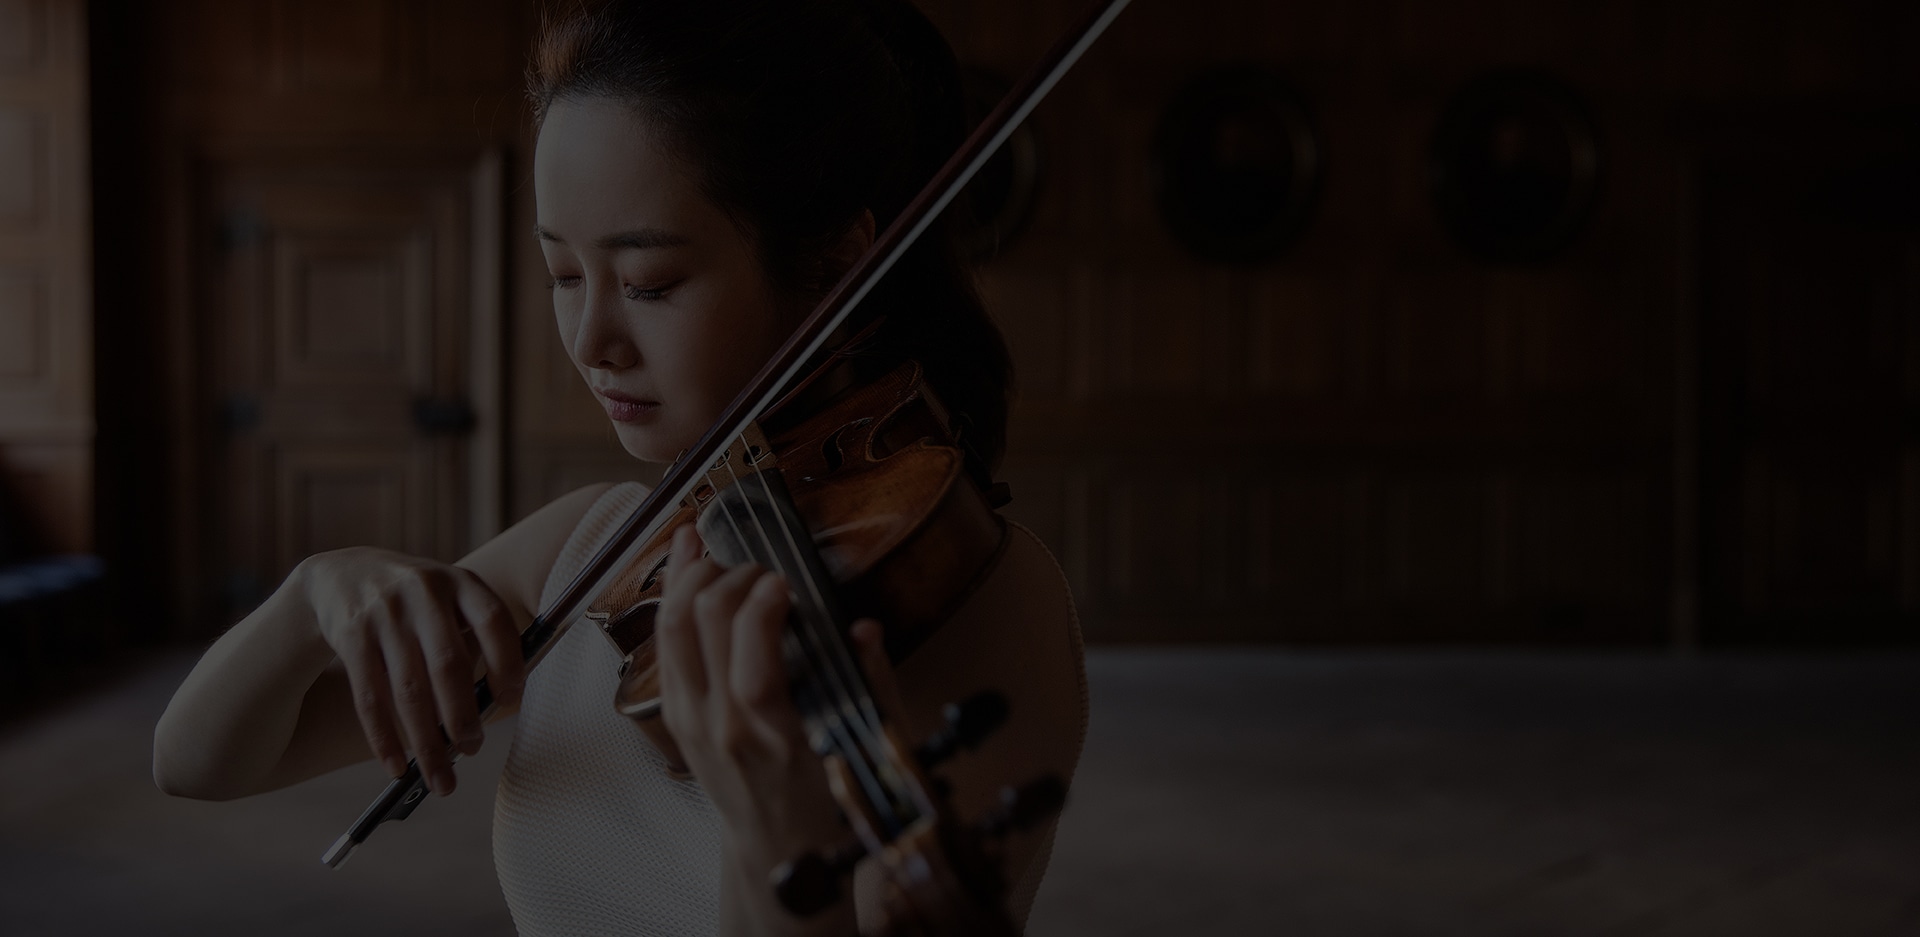 LG SIGNATURE works with the Korean violinist Bomsori.